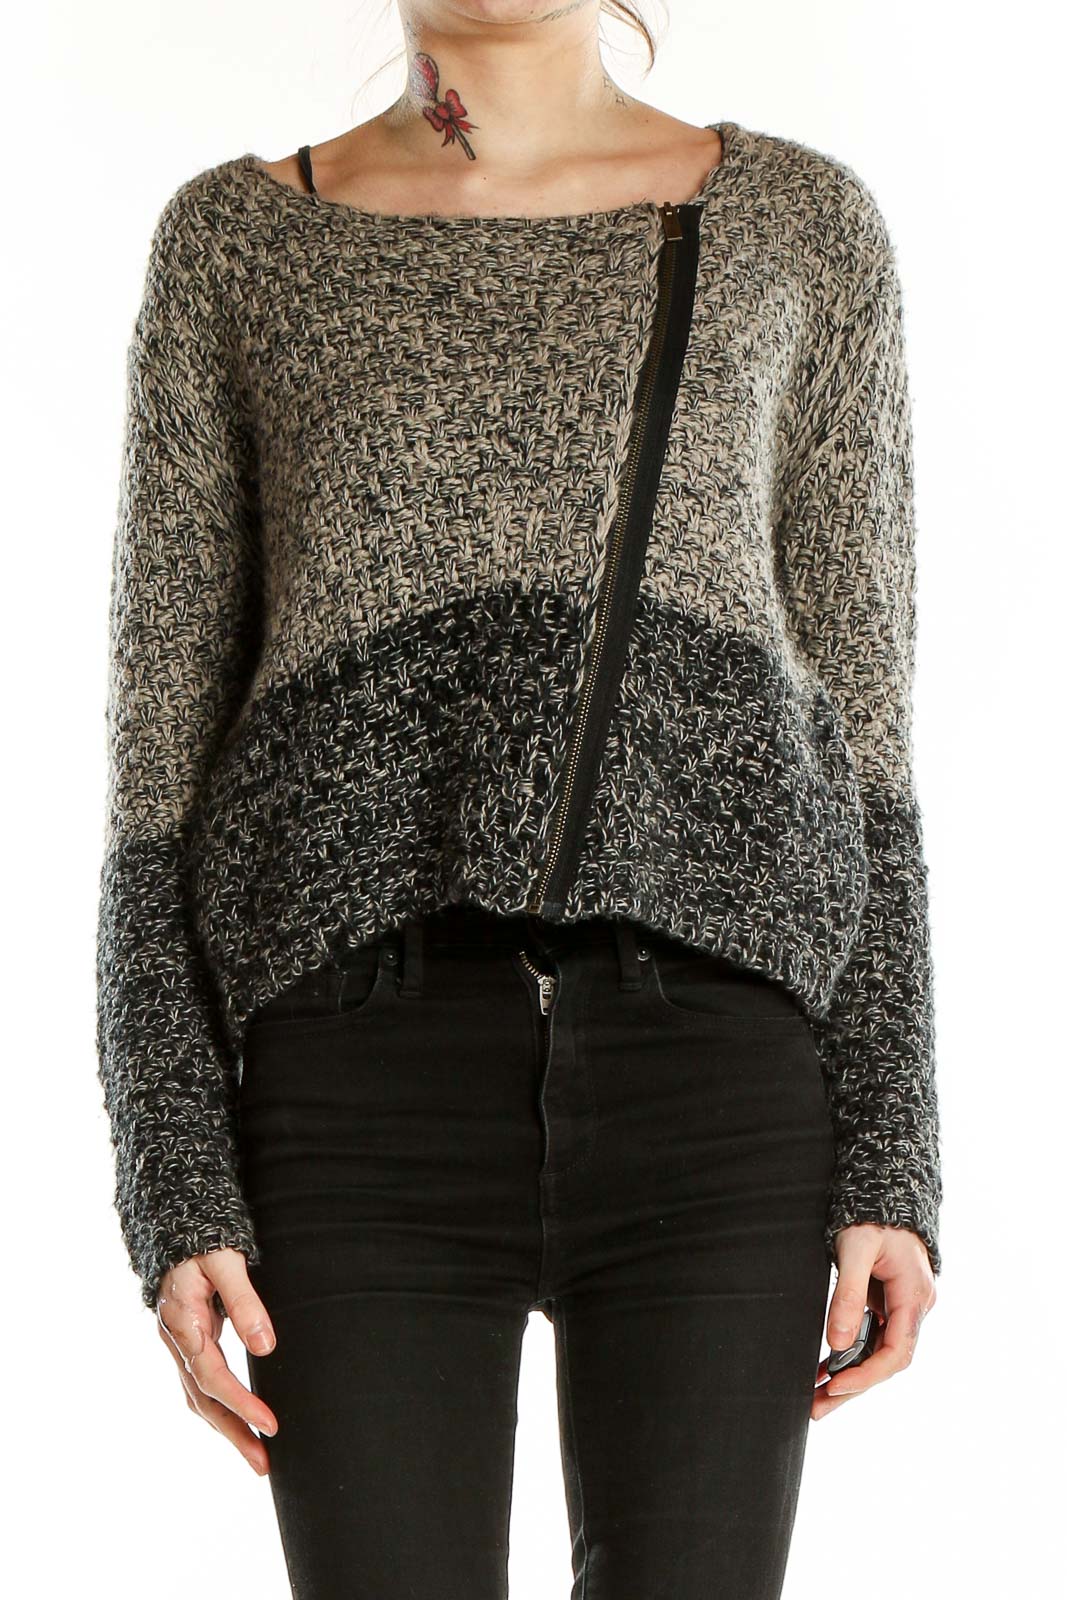 Gray Zip Up Texture Sweater Front